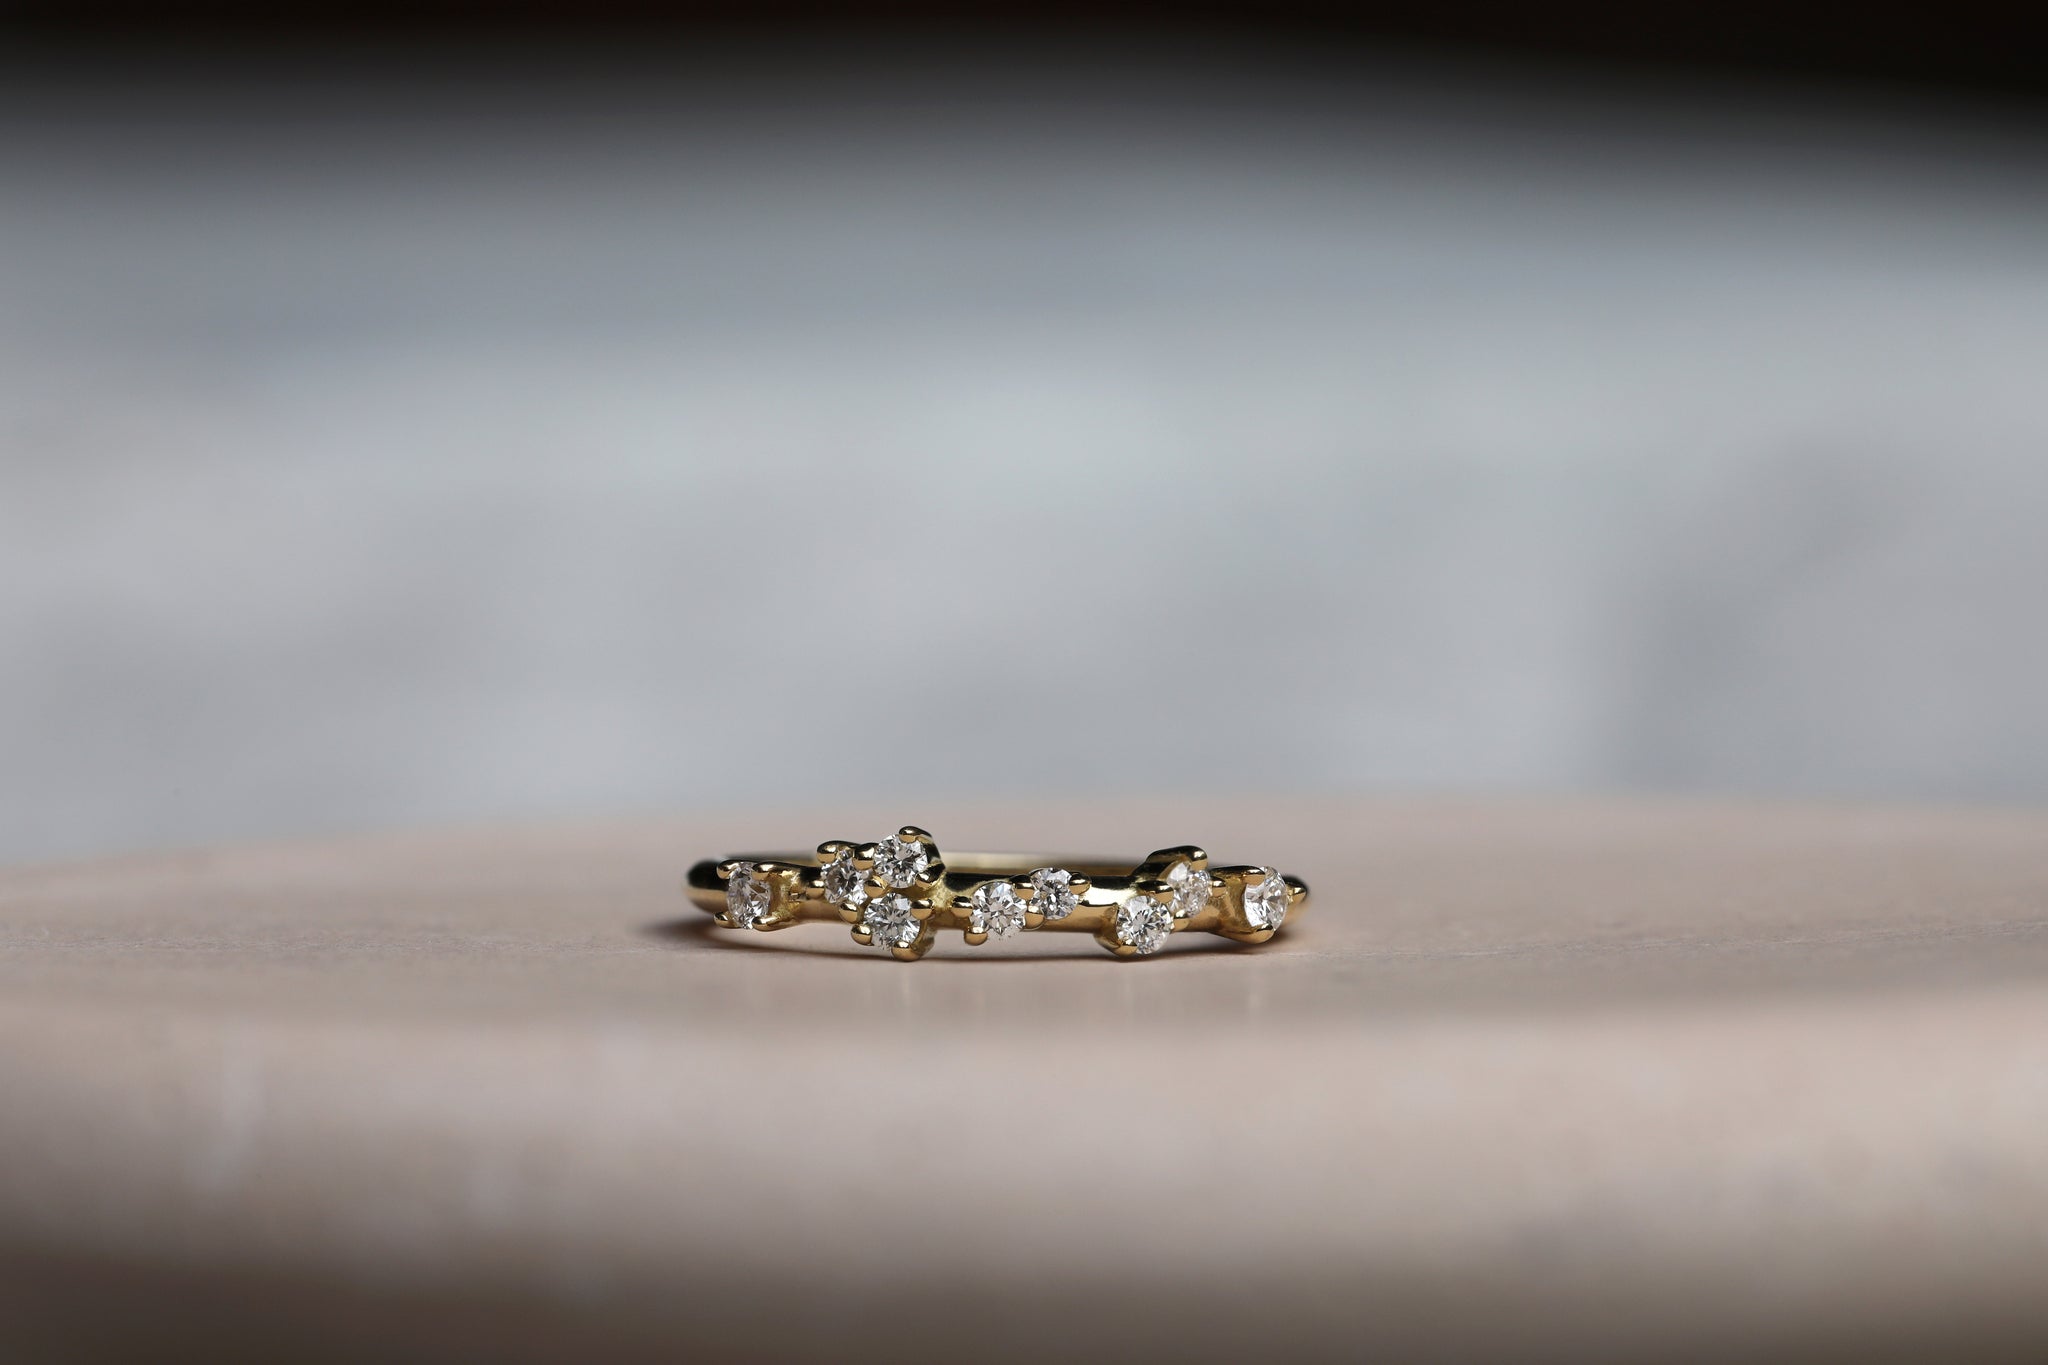 Bespoke diamond wedding ring handmade in London using a delicate mix of round diamonds